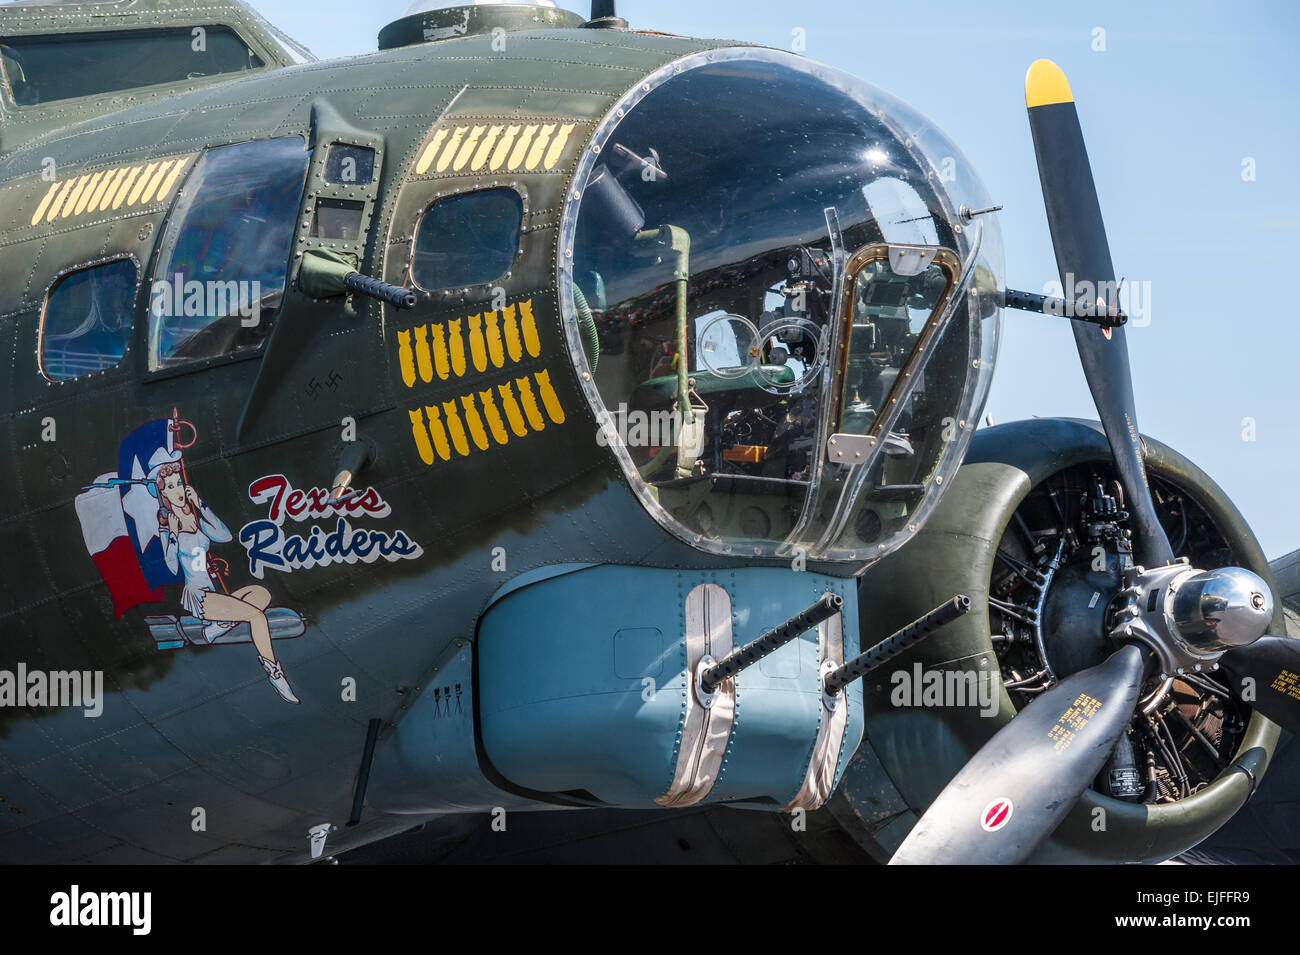 World War II bomber nose art on Texas Raiders B-17 Flying Fortress. USA. Stock Photo